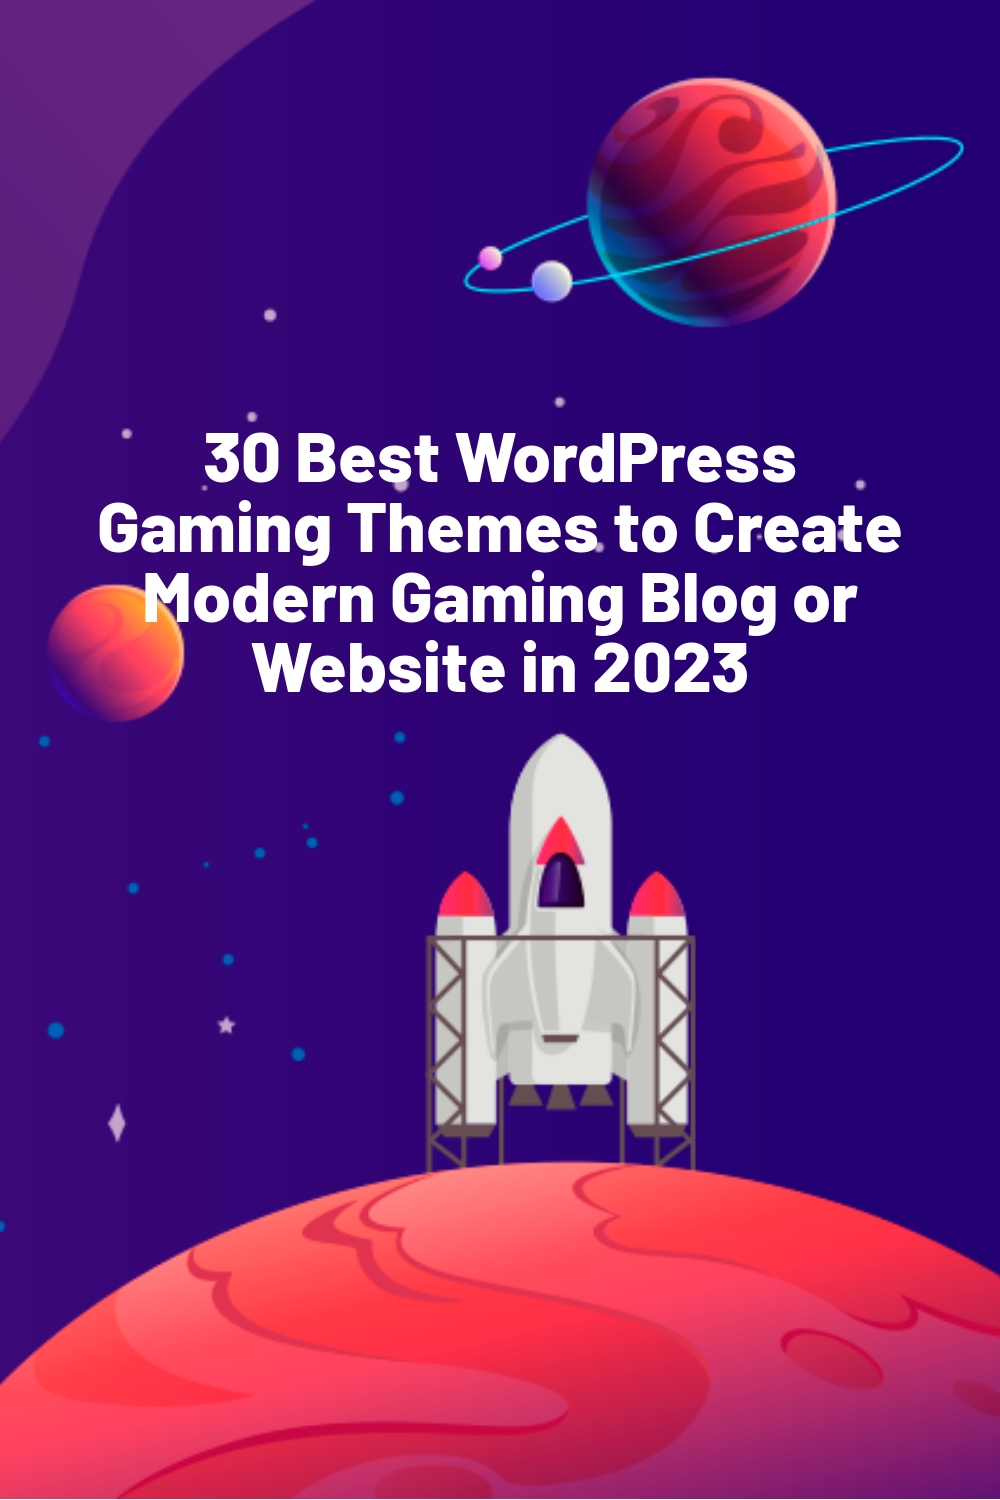 30 Best WordPress Gaming Themes to Create Modern Gaming Blog or Website in 2023